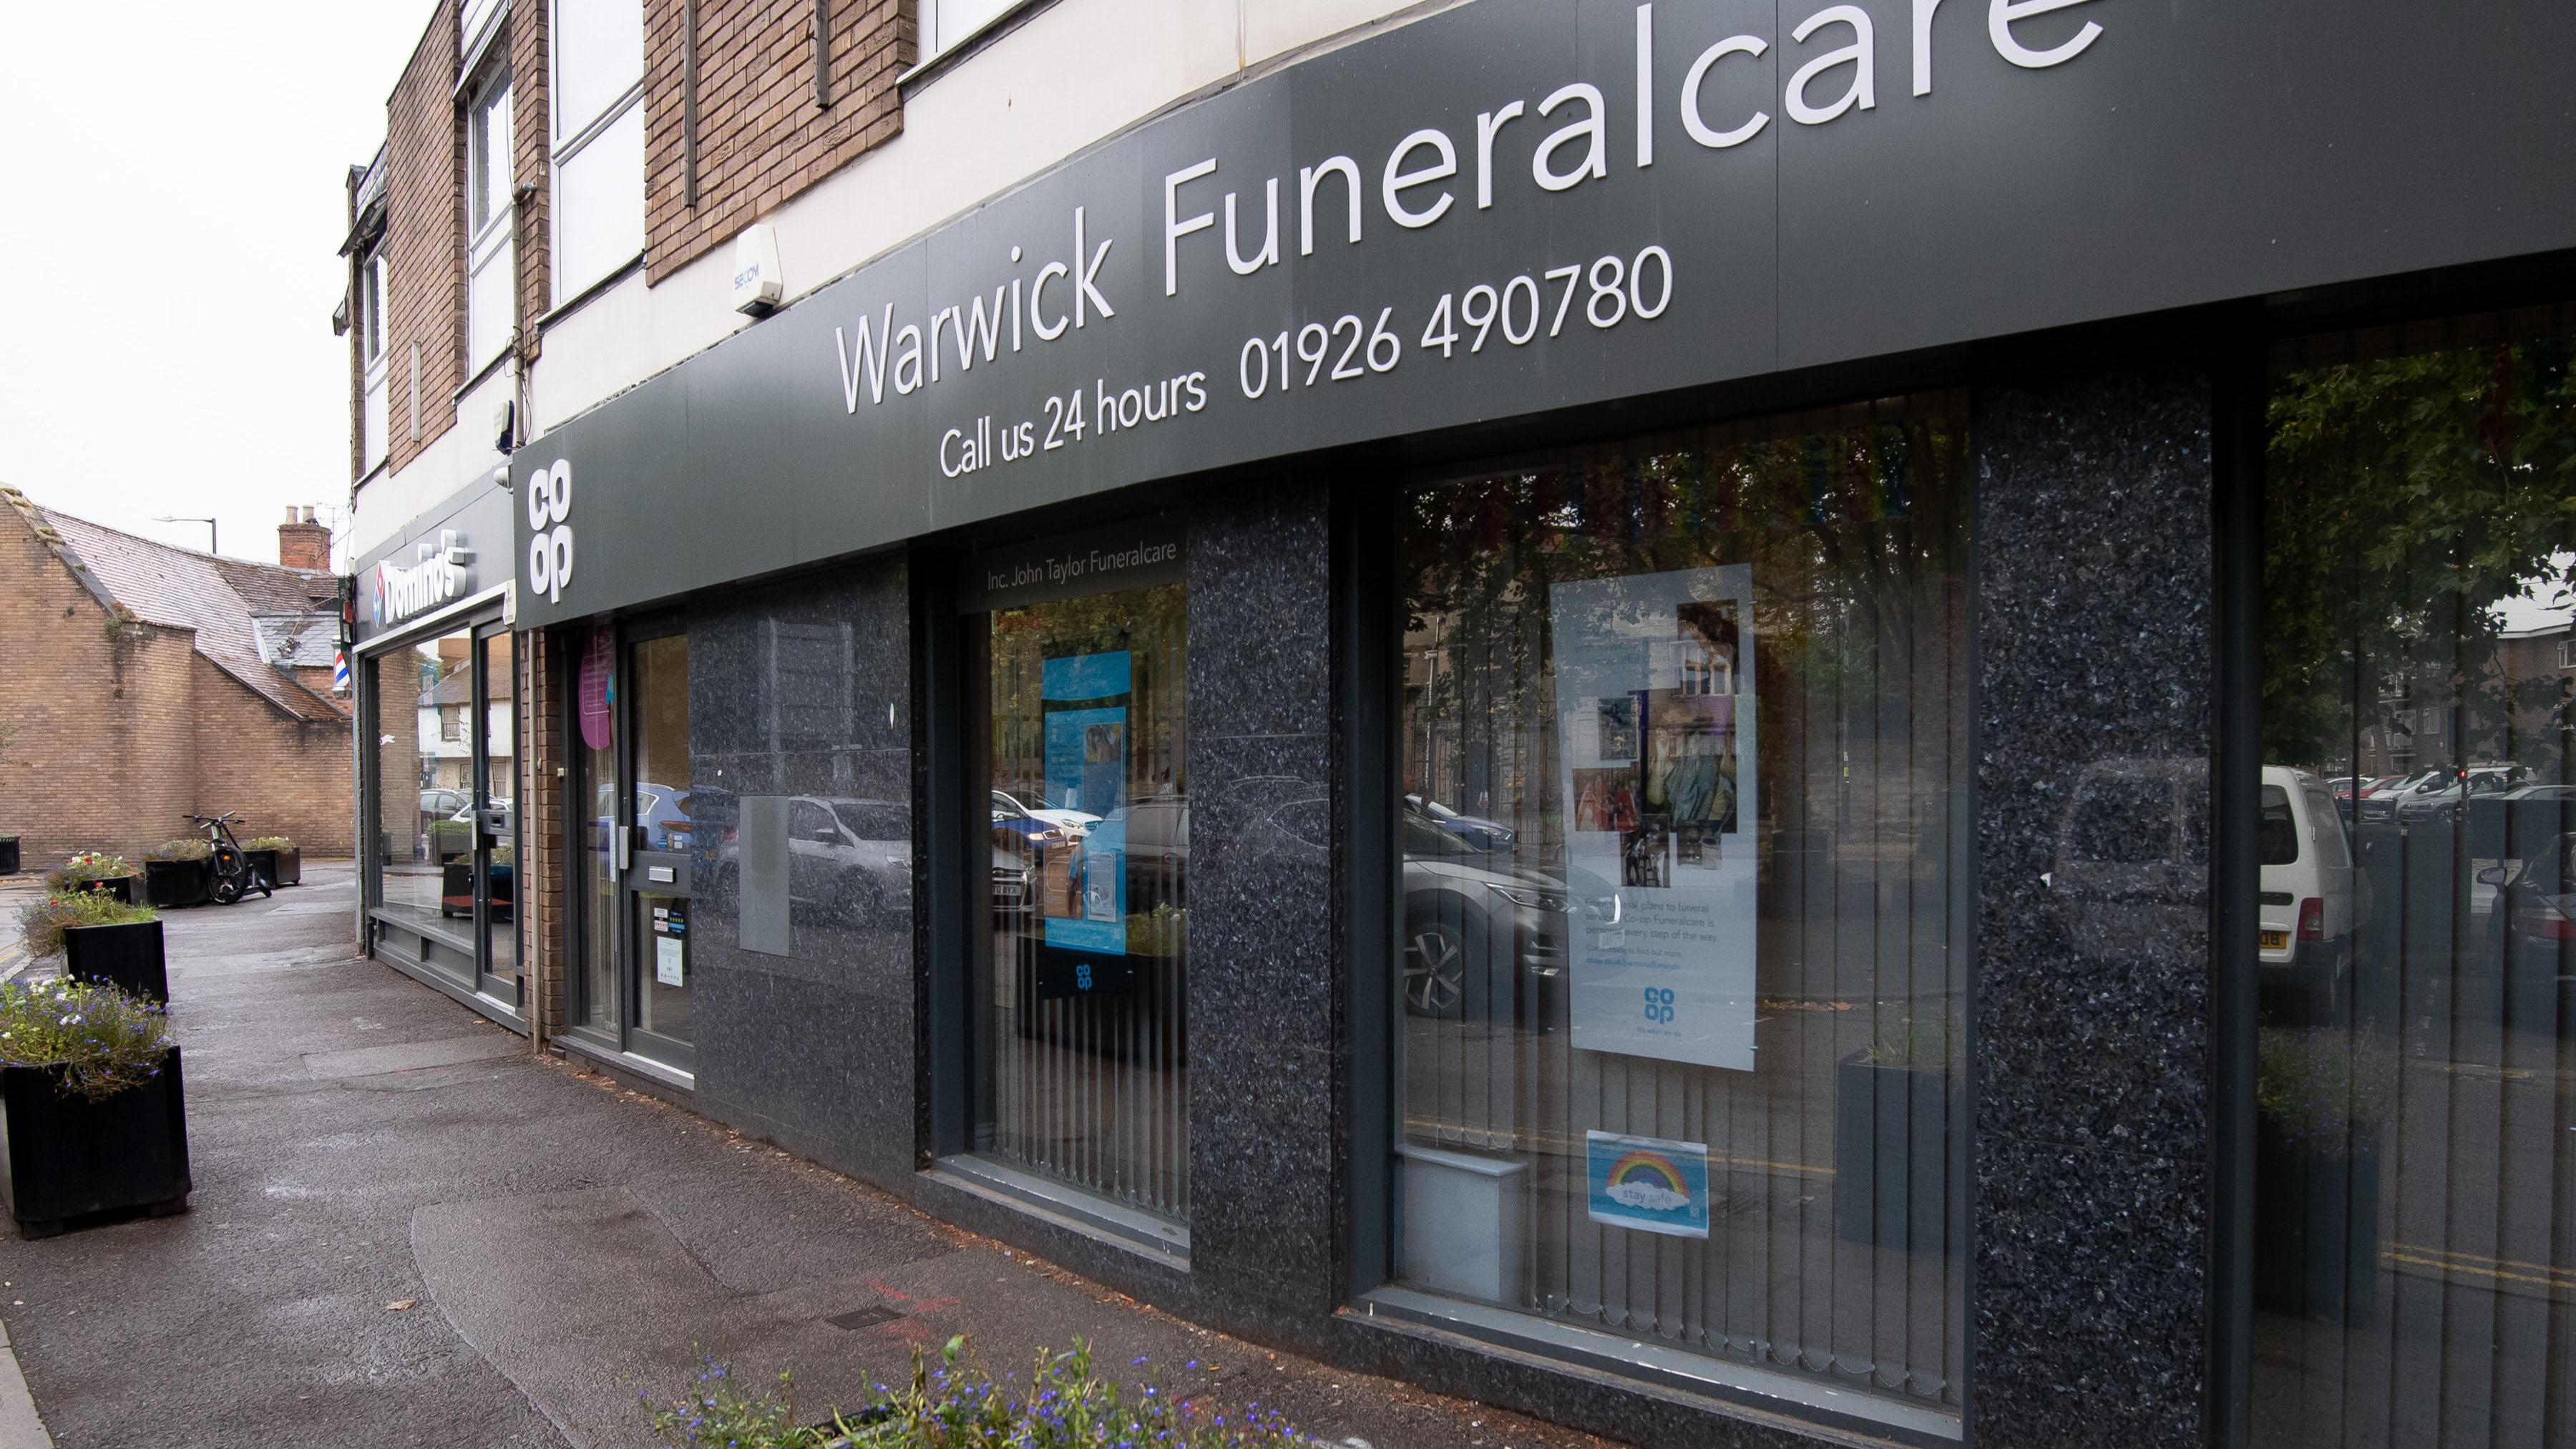 Images Warwick Funeralcare (inc John Taylor Funeralcare)